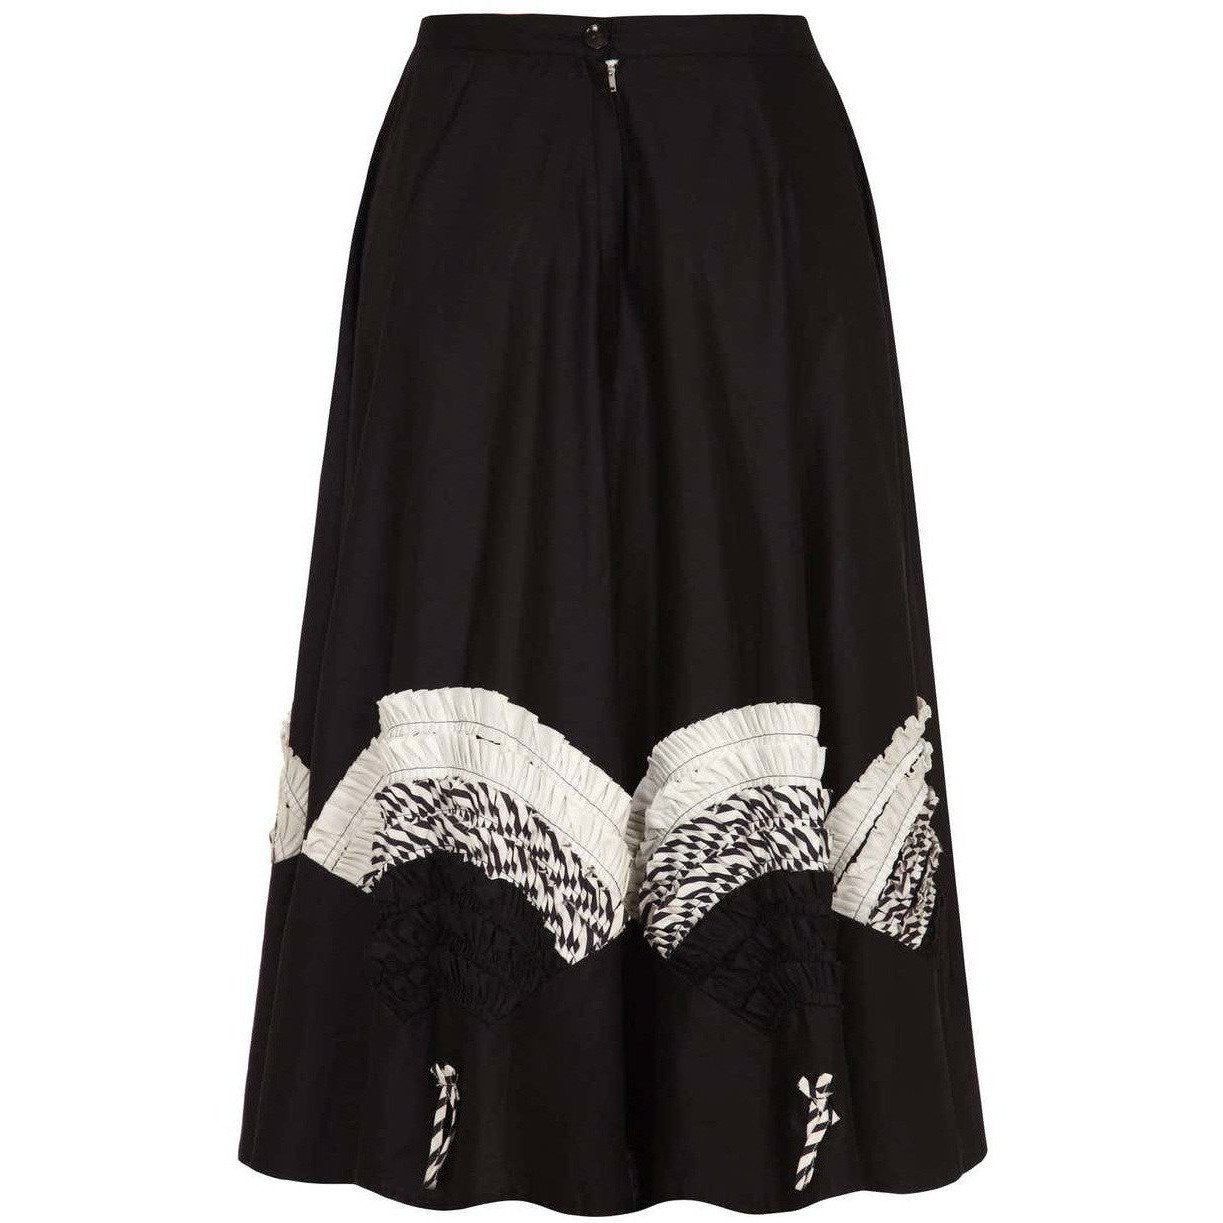 1950s Black Circle Skirt With Monochrome Applique